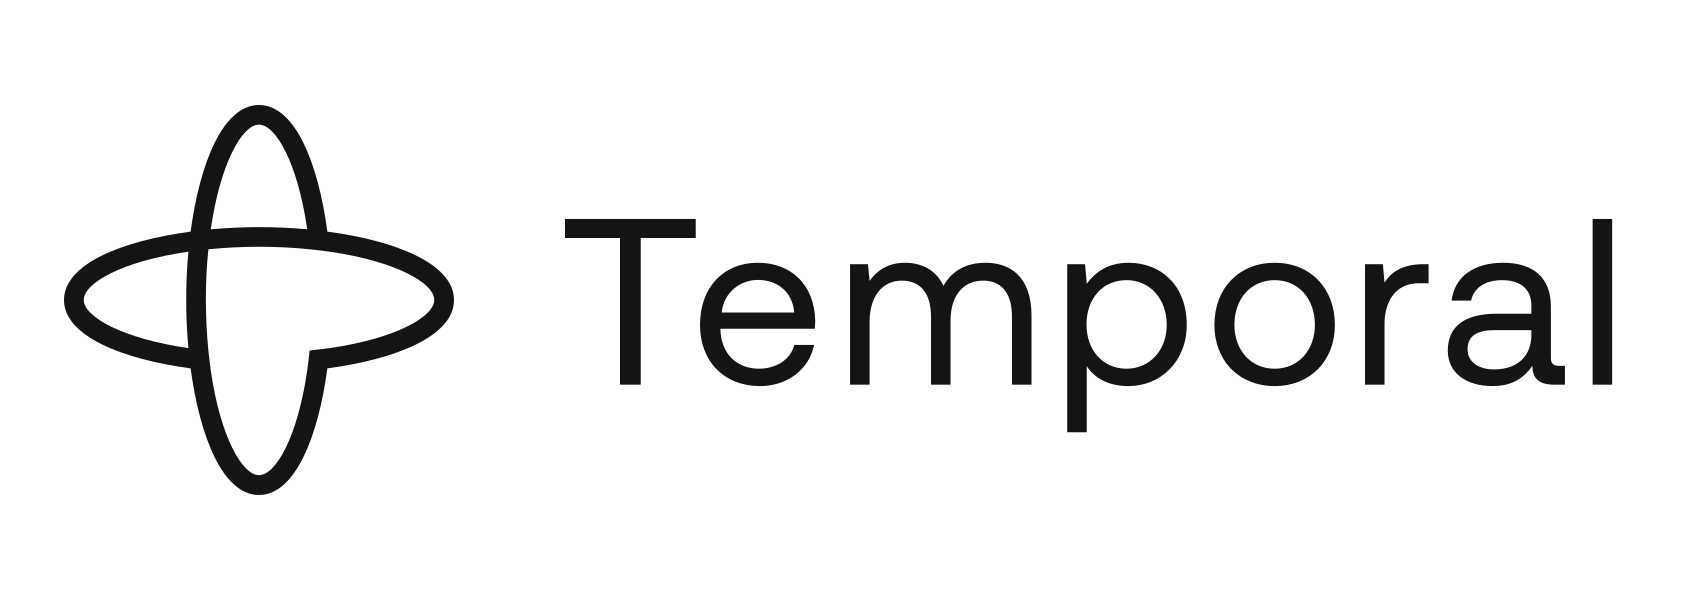 Temporal Technologies Sponsor Logo